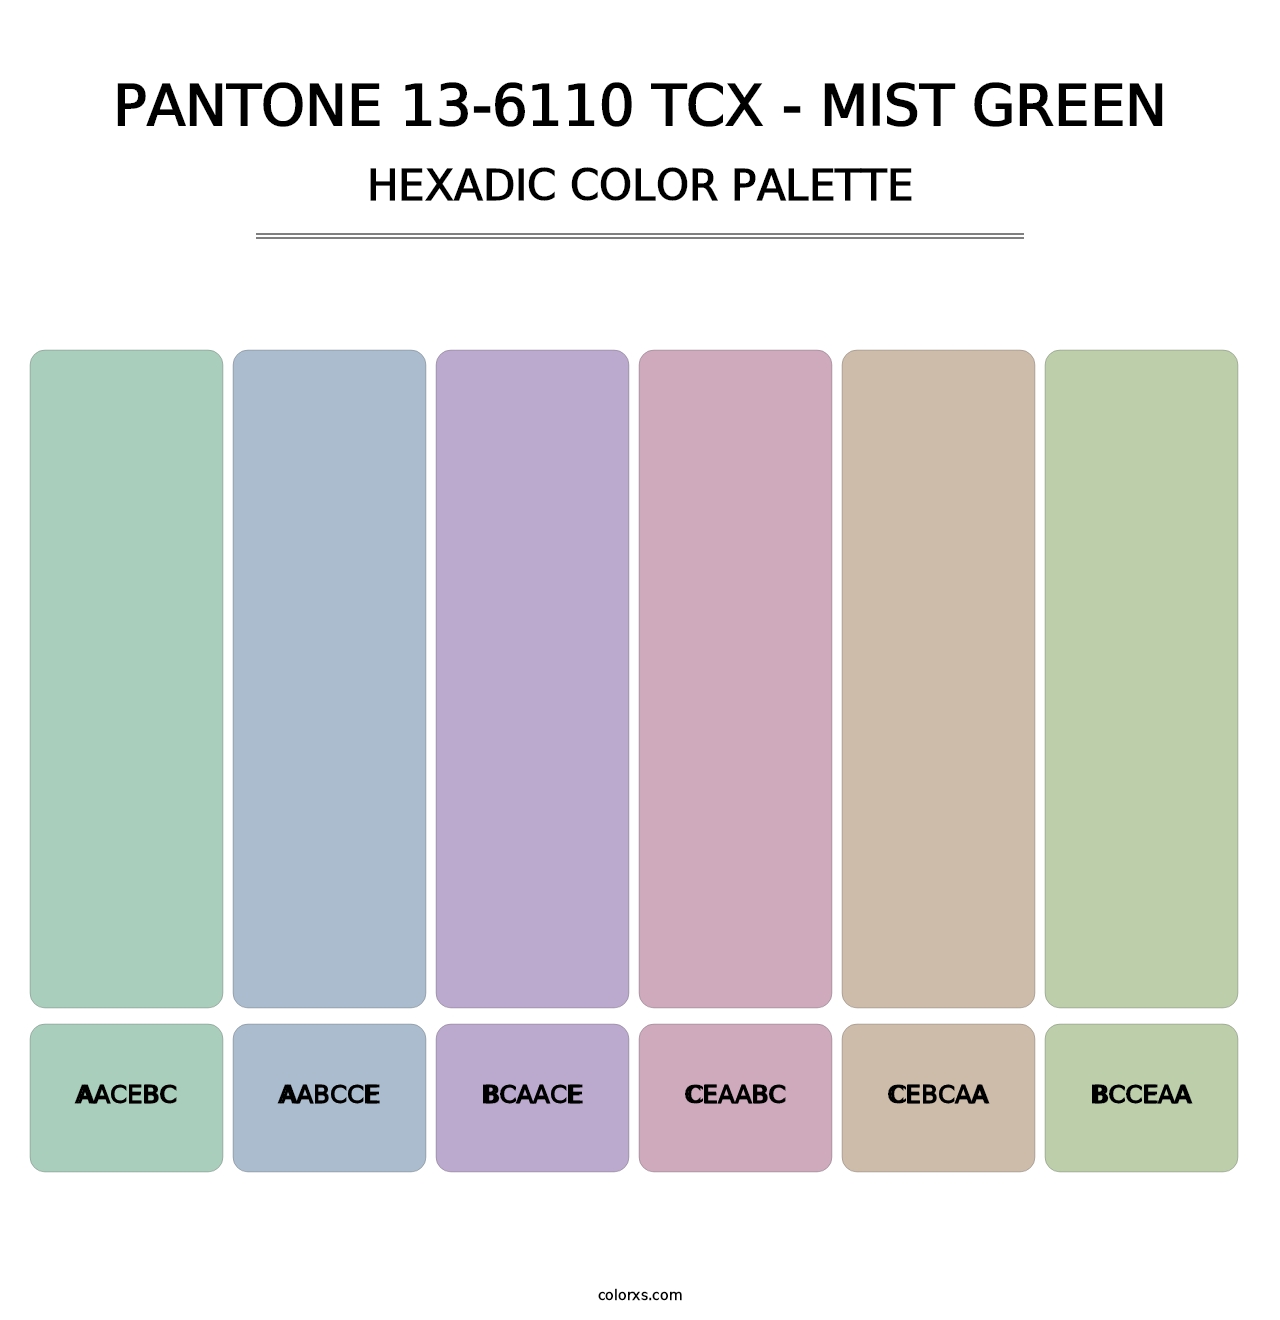 PANTONE 13-6110 TCX - Mist Green - Hexadic Color Palette